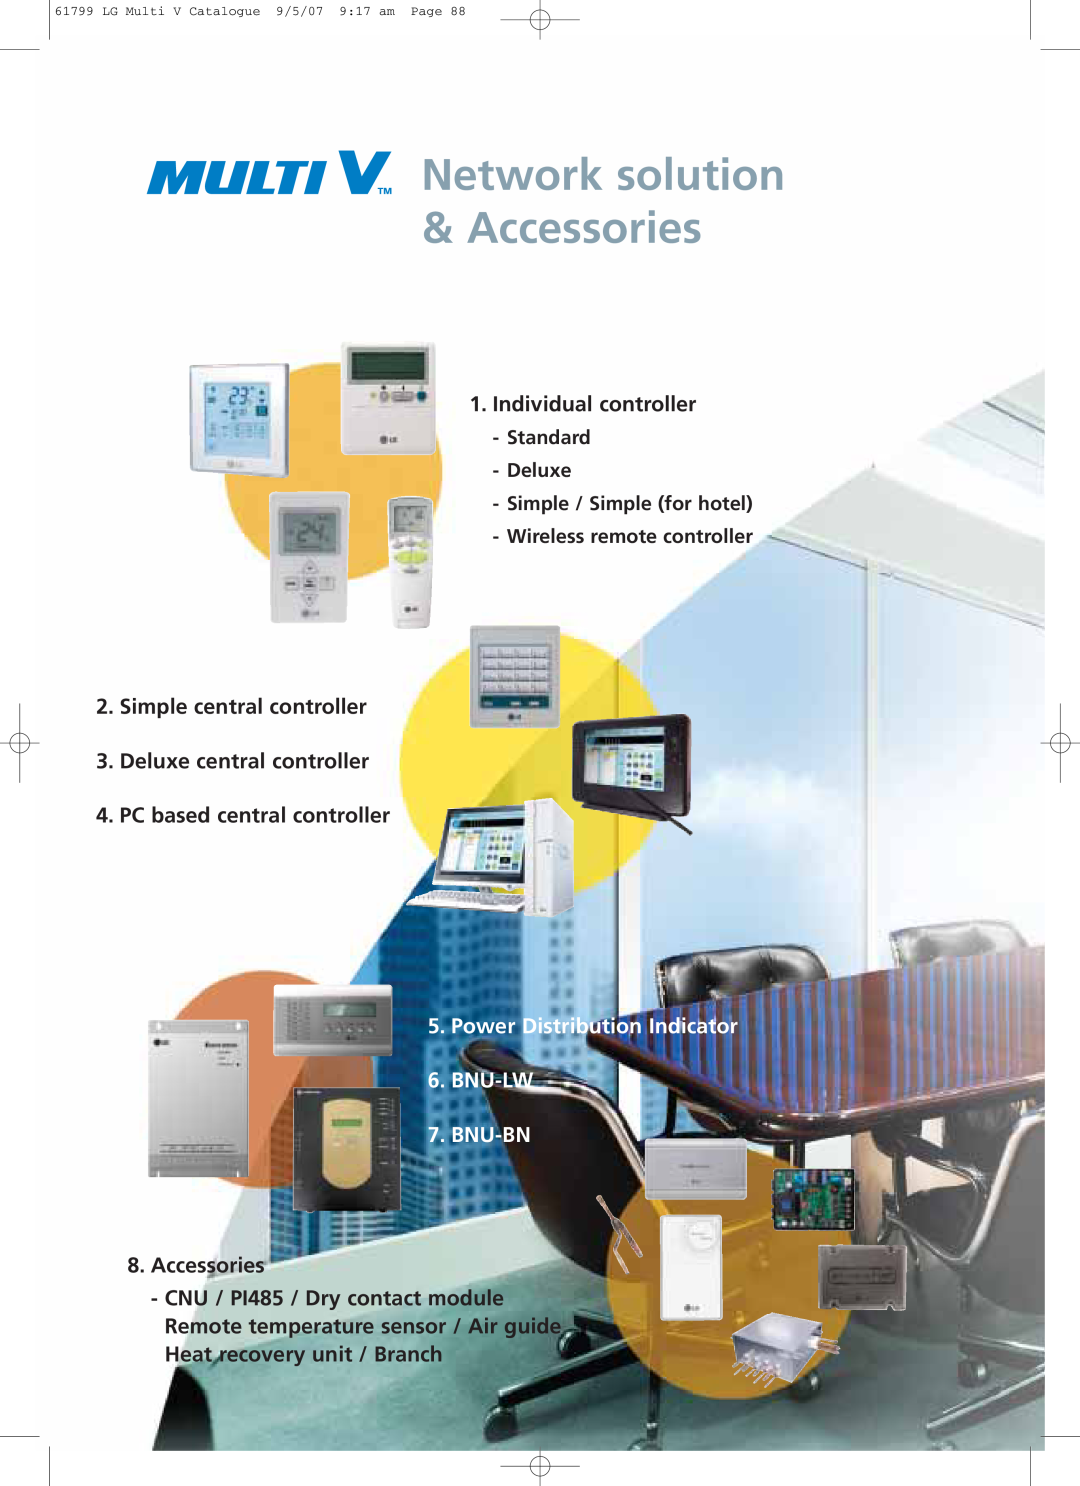 LG Electronics PRHR040 manual Network solution Accessories, Power Distribution Indicator 6. BNU-LW 7. BNU-BN 